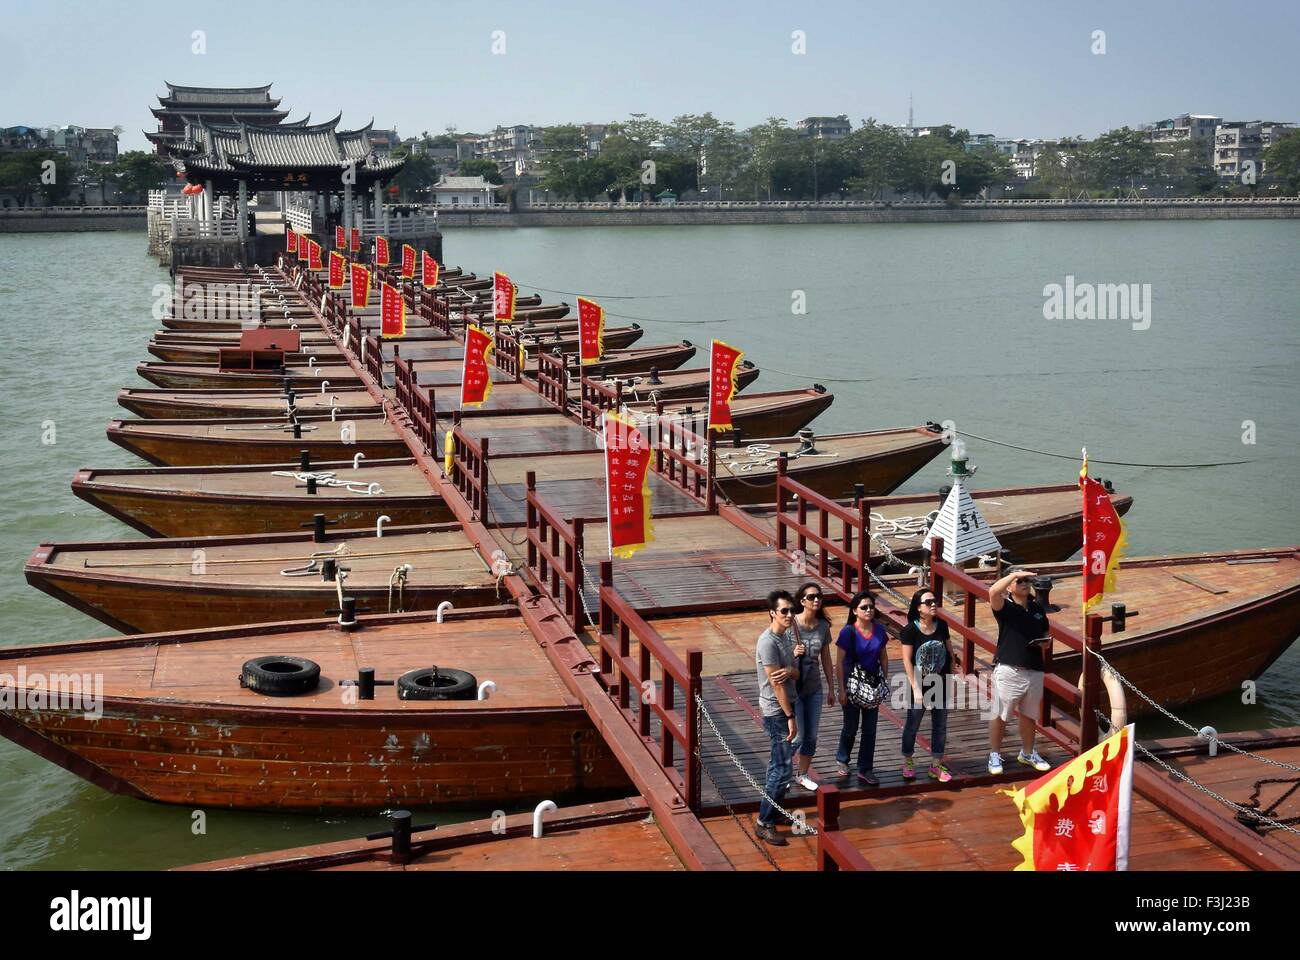 Плавучий мост в китае